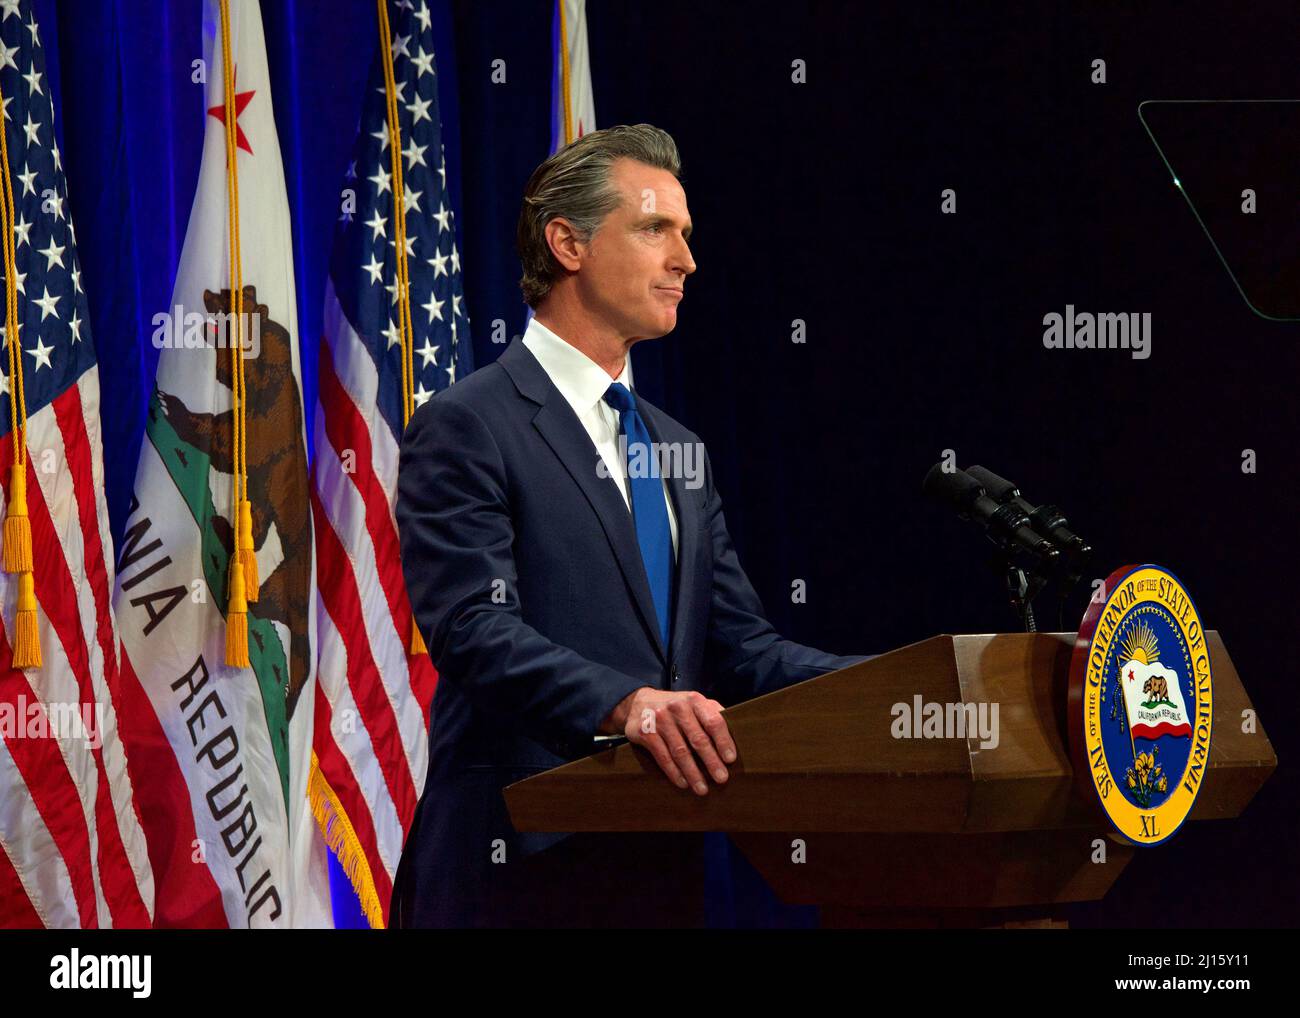 Sacramento, CA - March 8, 2022: California Governor Gavin Newsom speaking at the State of the State address in Sacramento, CA. Stock Photo